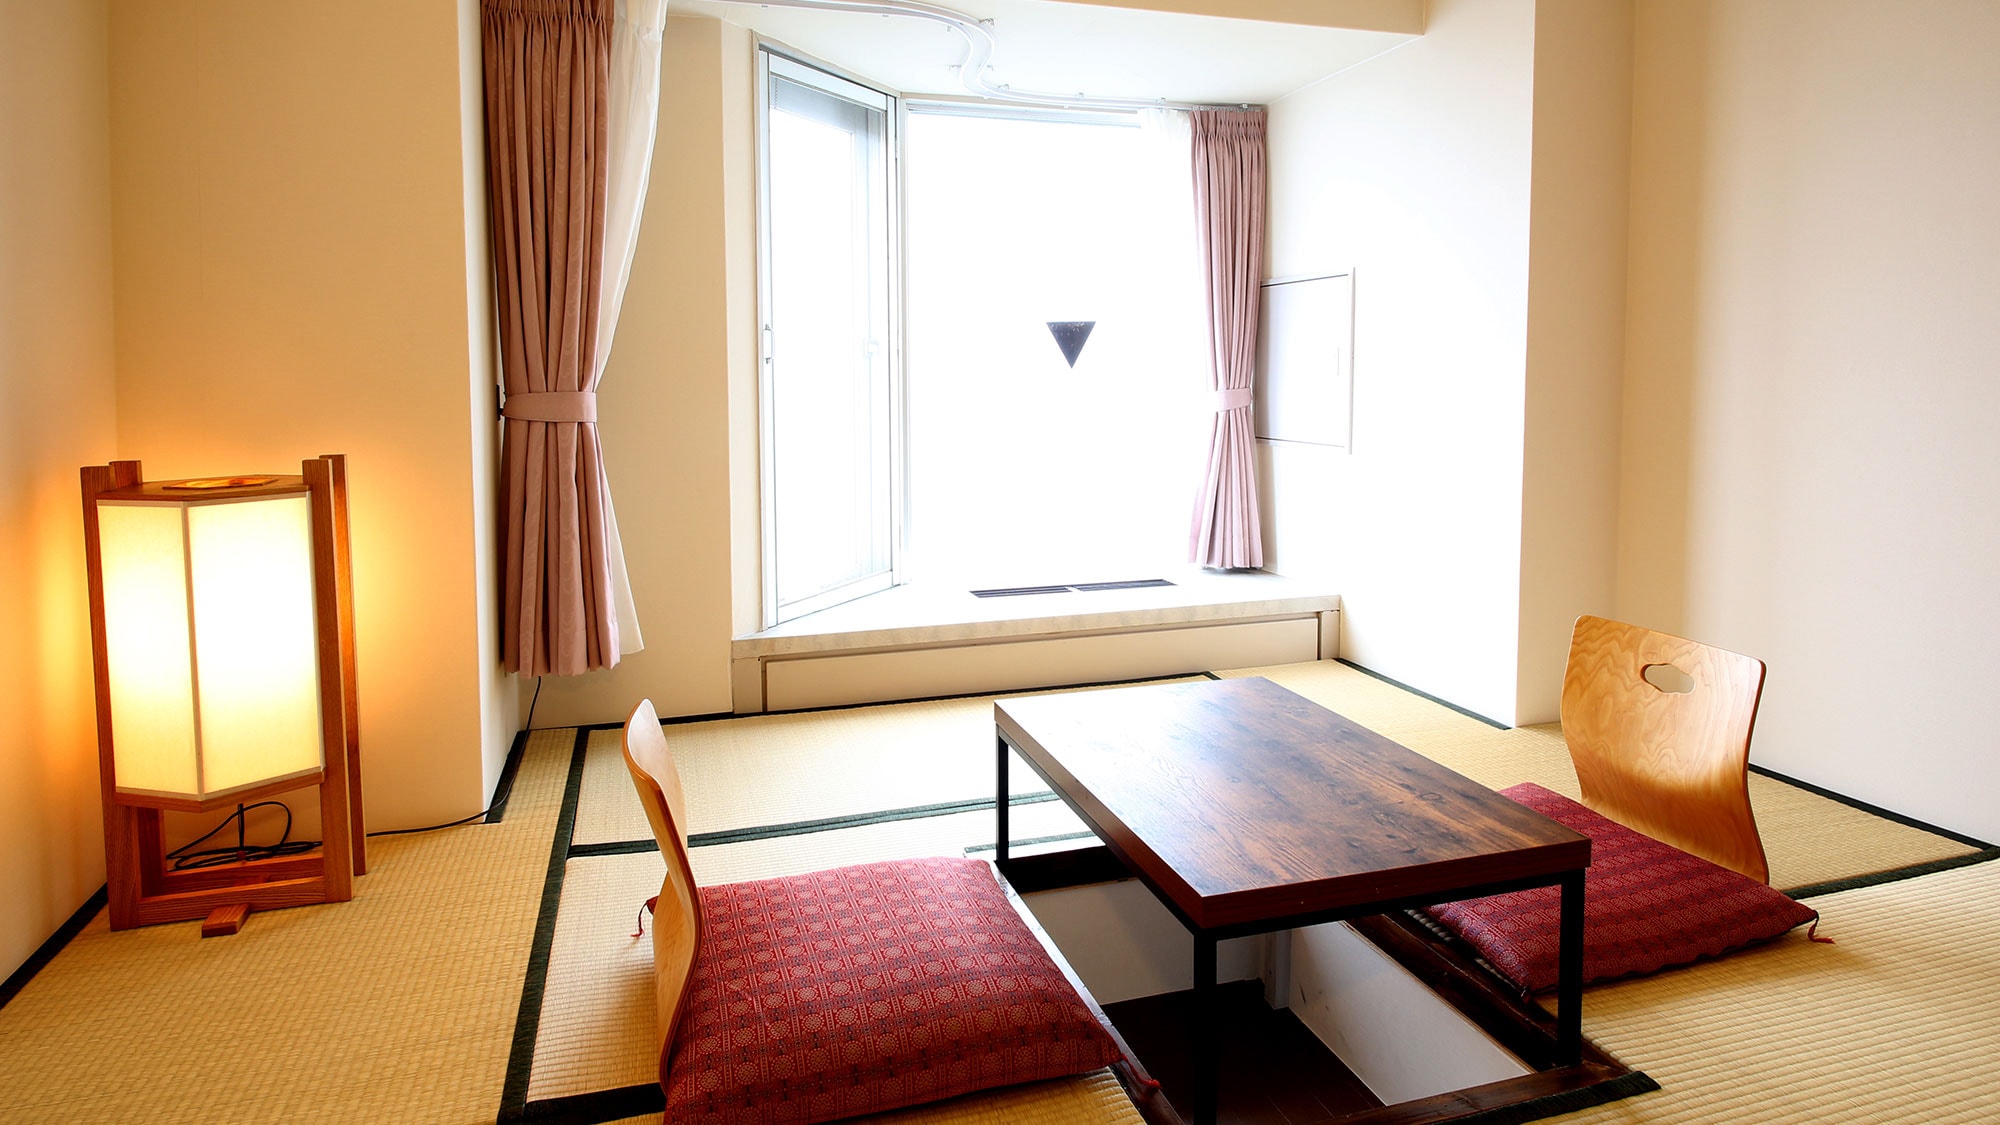 Ruang Tatami di kamar Jepang dan Barat